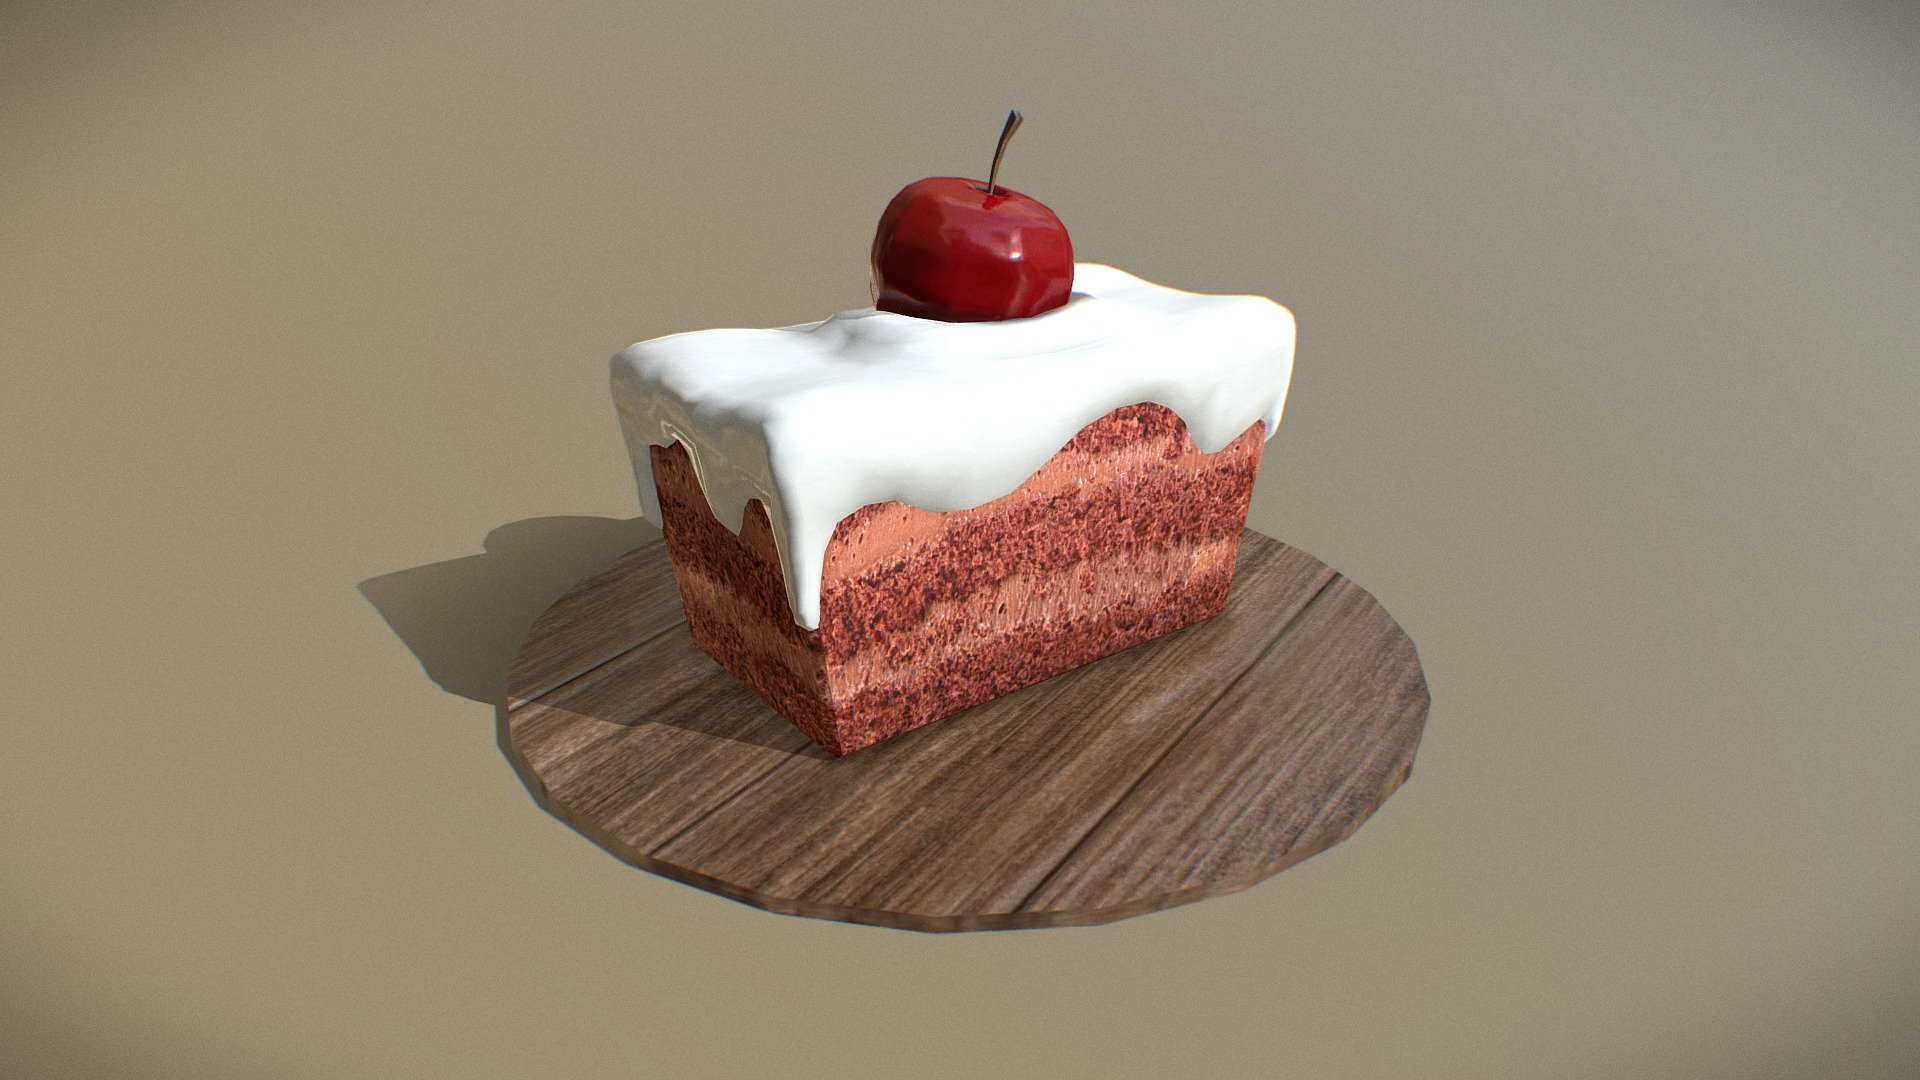 Cake with Cherry modeled for Dessert Challenge 3d model